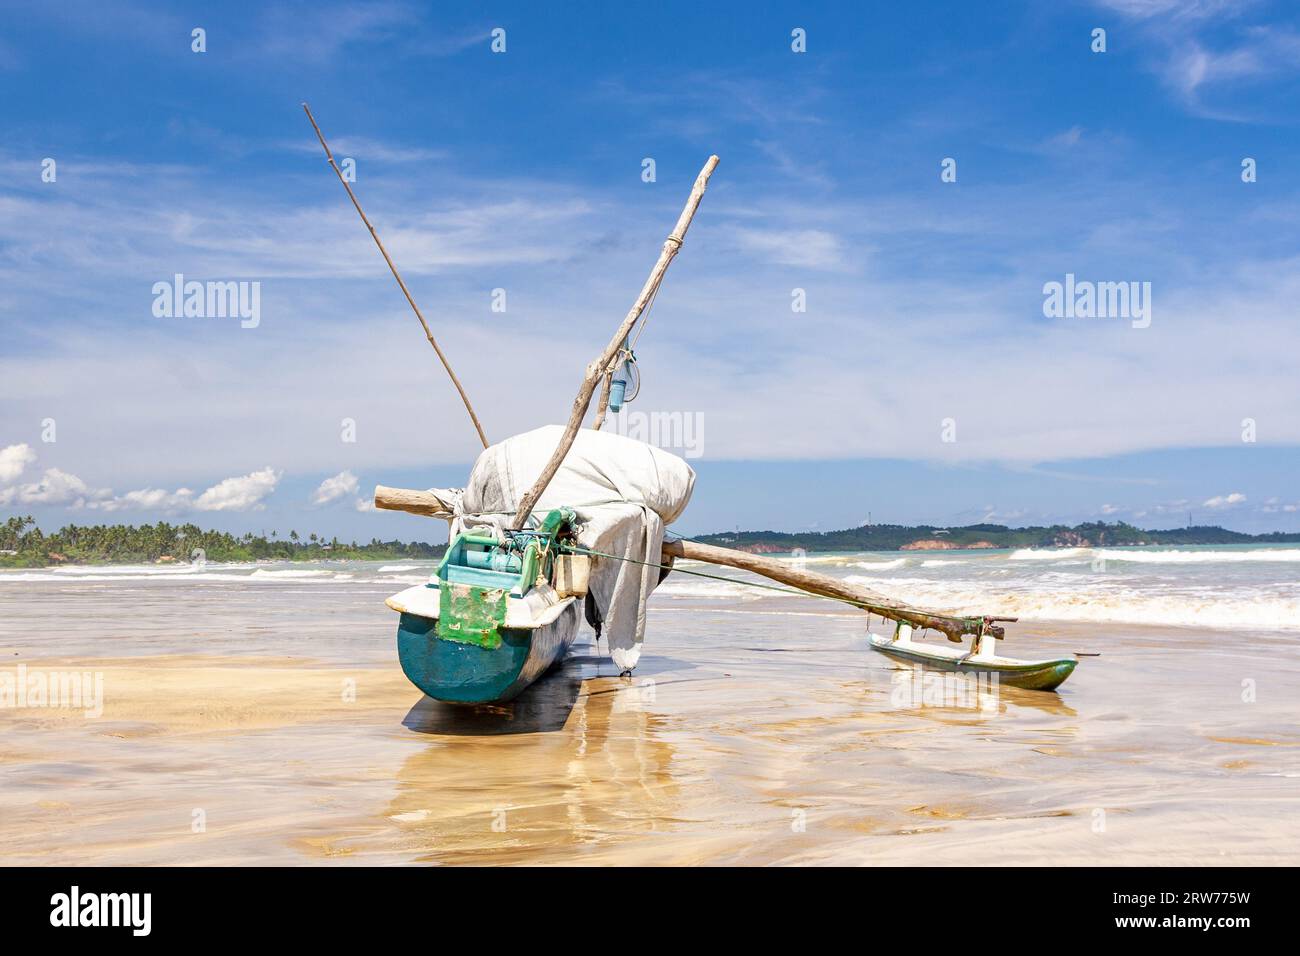 Fishing Motor Boats Parked in Shallow Water Beach Jaffna Peninsula Sri  Lanka Editorial Stock Image - Image of beach, lankan: 140343149